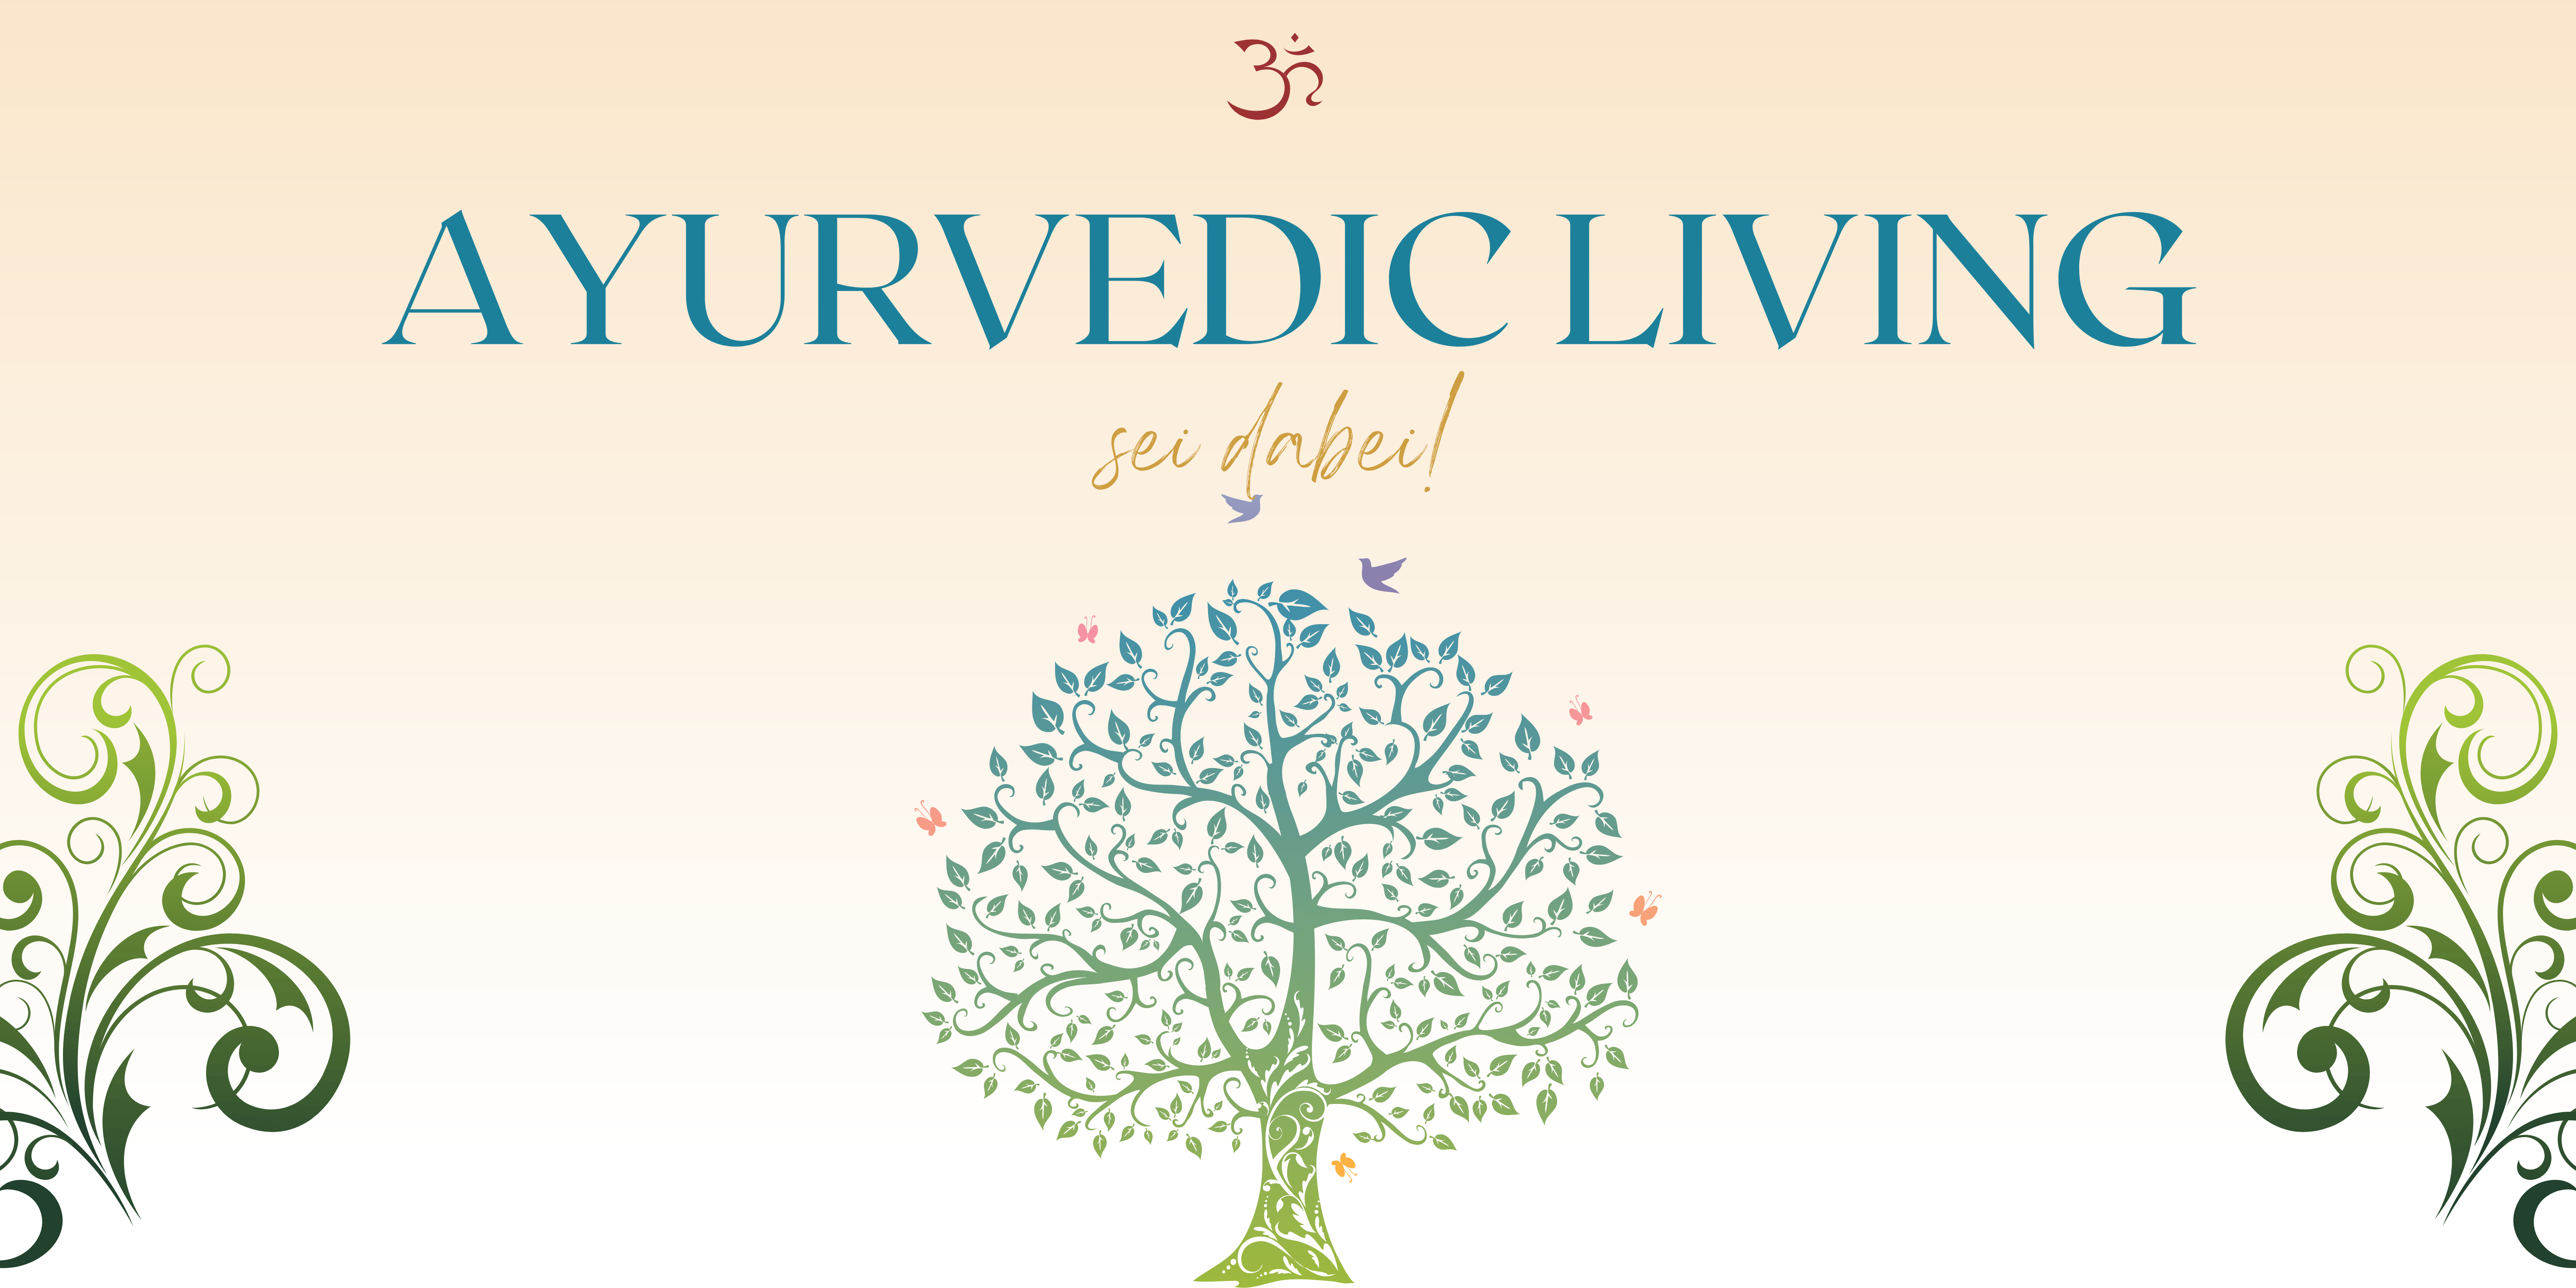 Ayurvedic Living - Yoga - coming soon